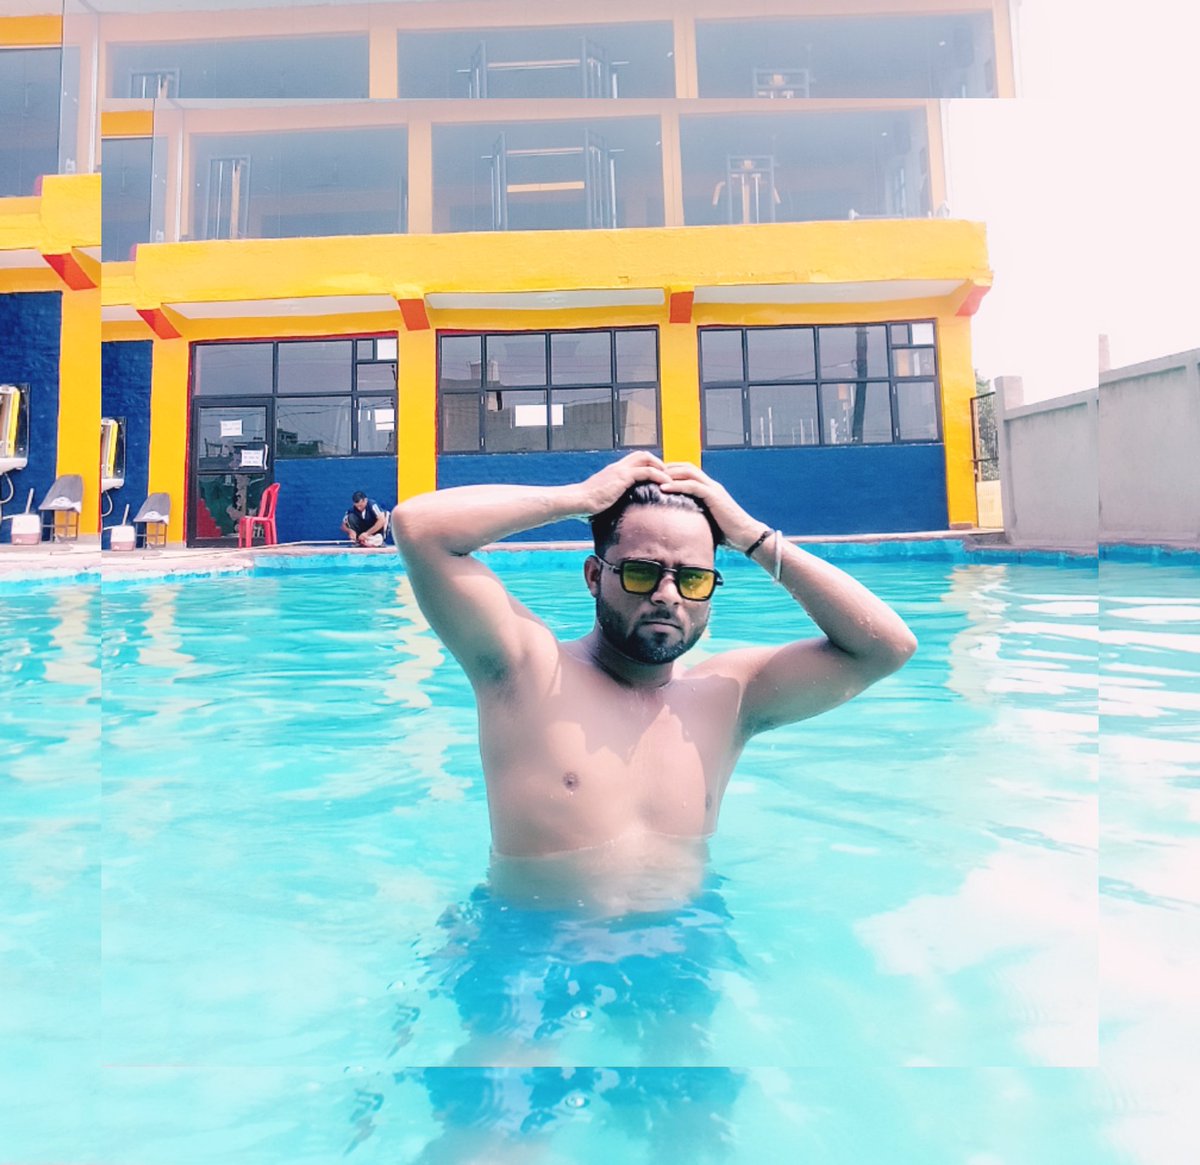 Life is cool by the pool...
#abhimehra #abhimehra012 #swimmingpool